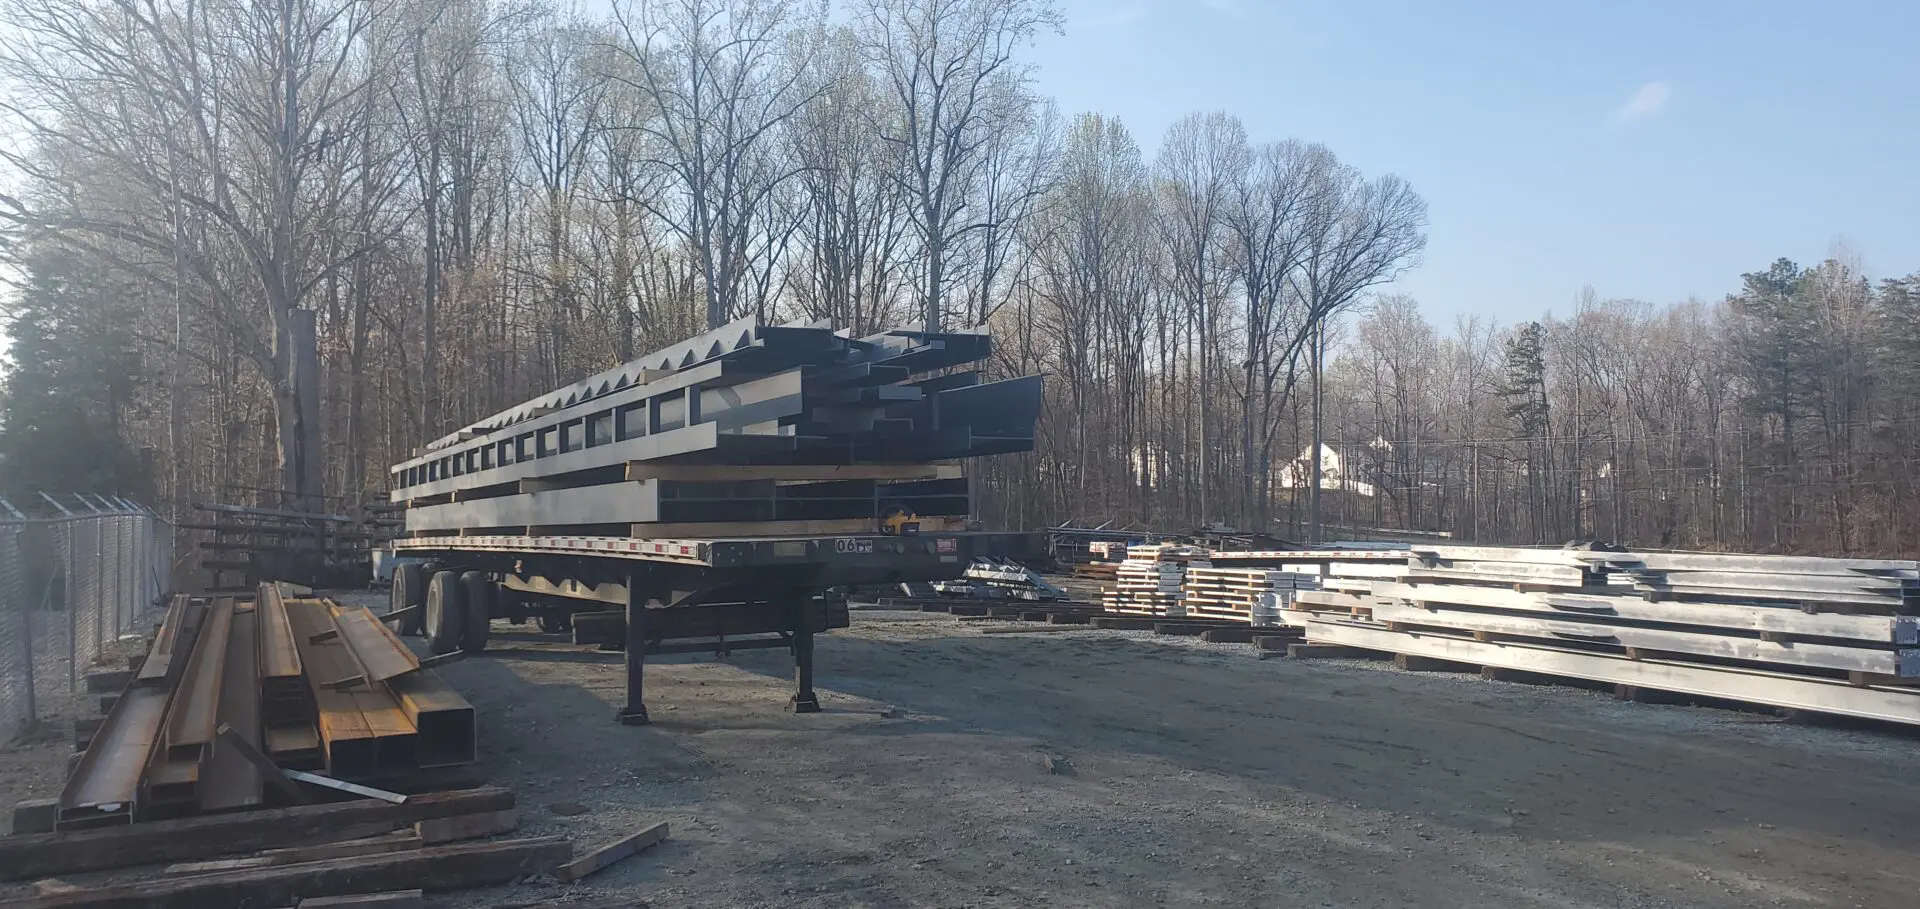 A truck transporting steel beams